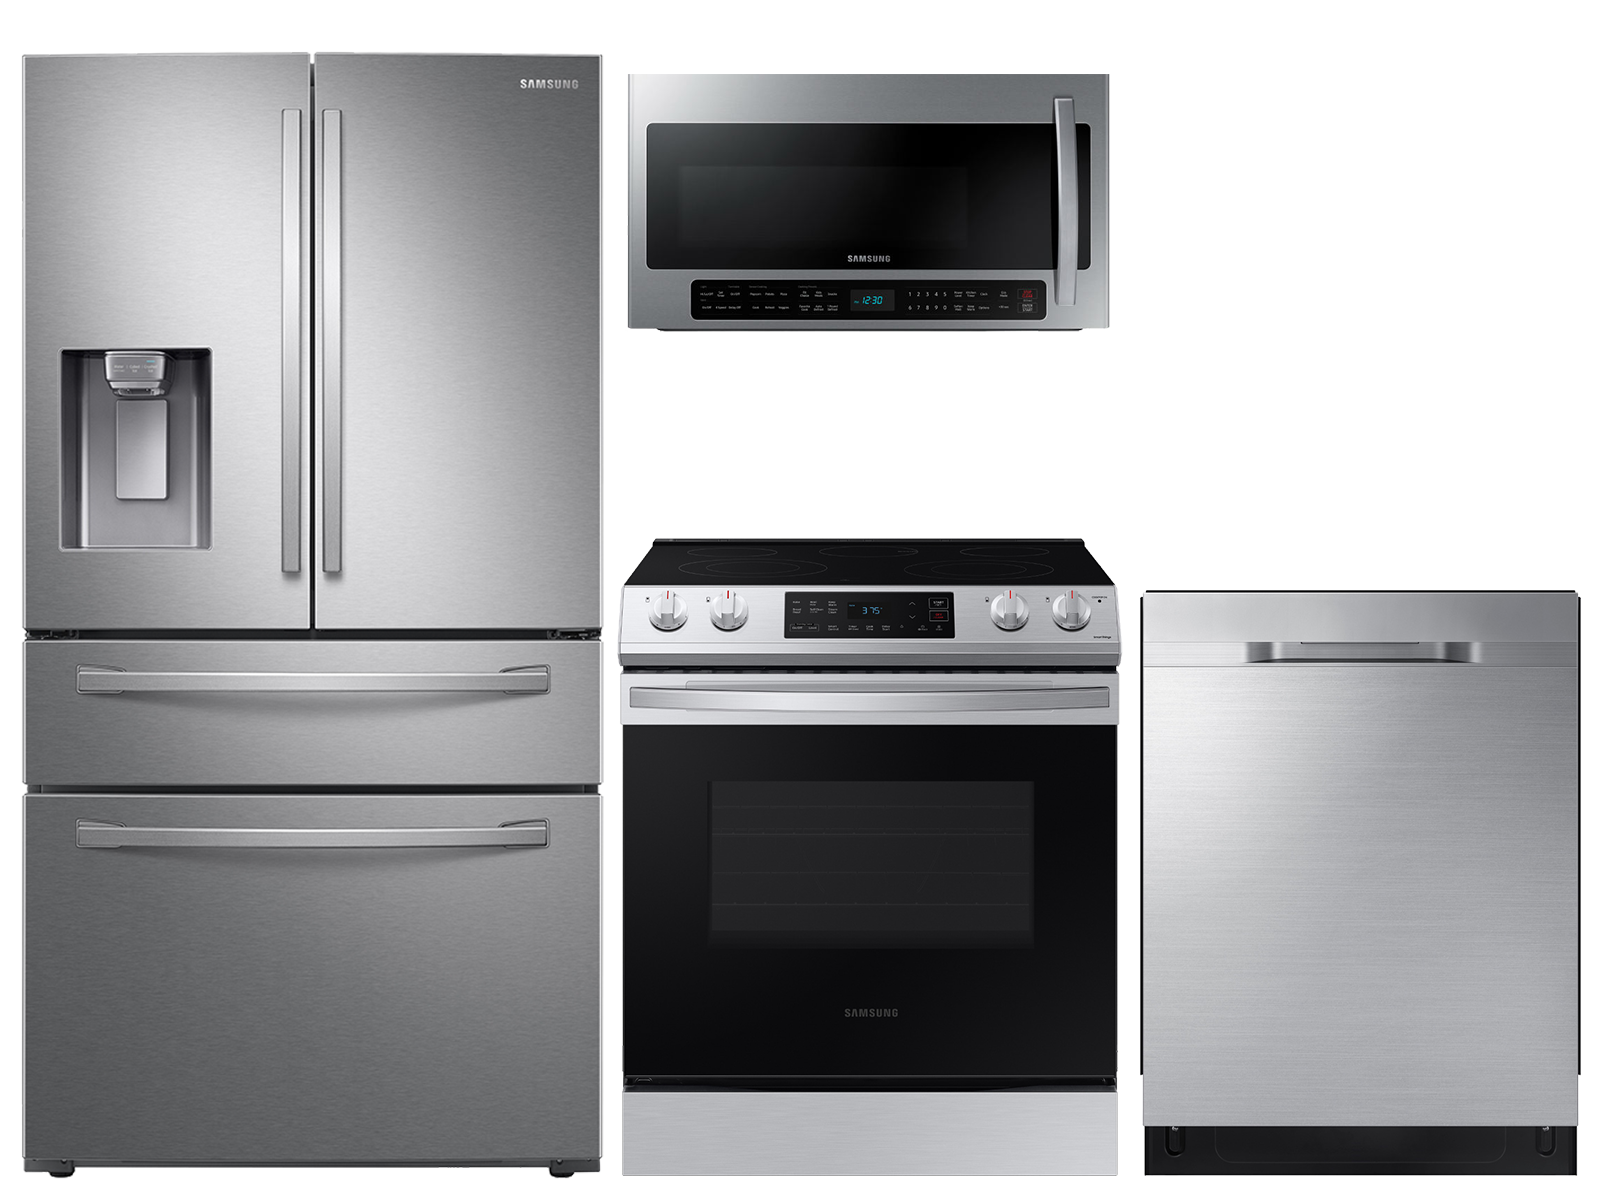 Samsung 28 cu. ft. 4-door refrigerator, 6.3 cu. ft. electric range, 2.1 cu. ft. microwave and 48 dBA dishwasher package(BNDL-1613507824747)